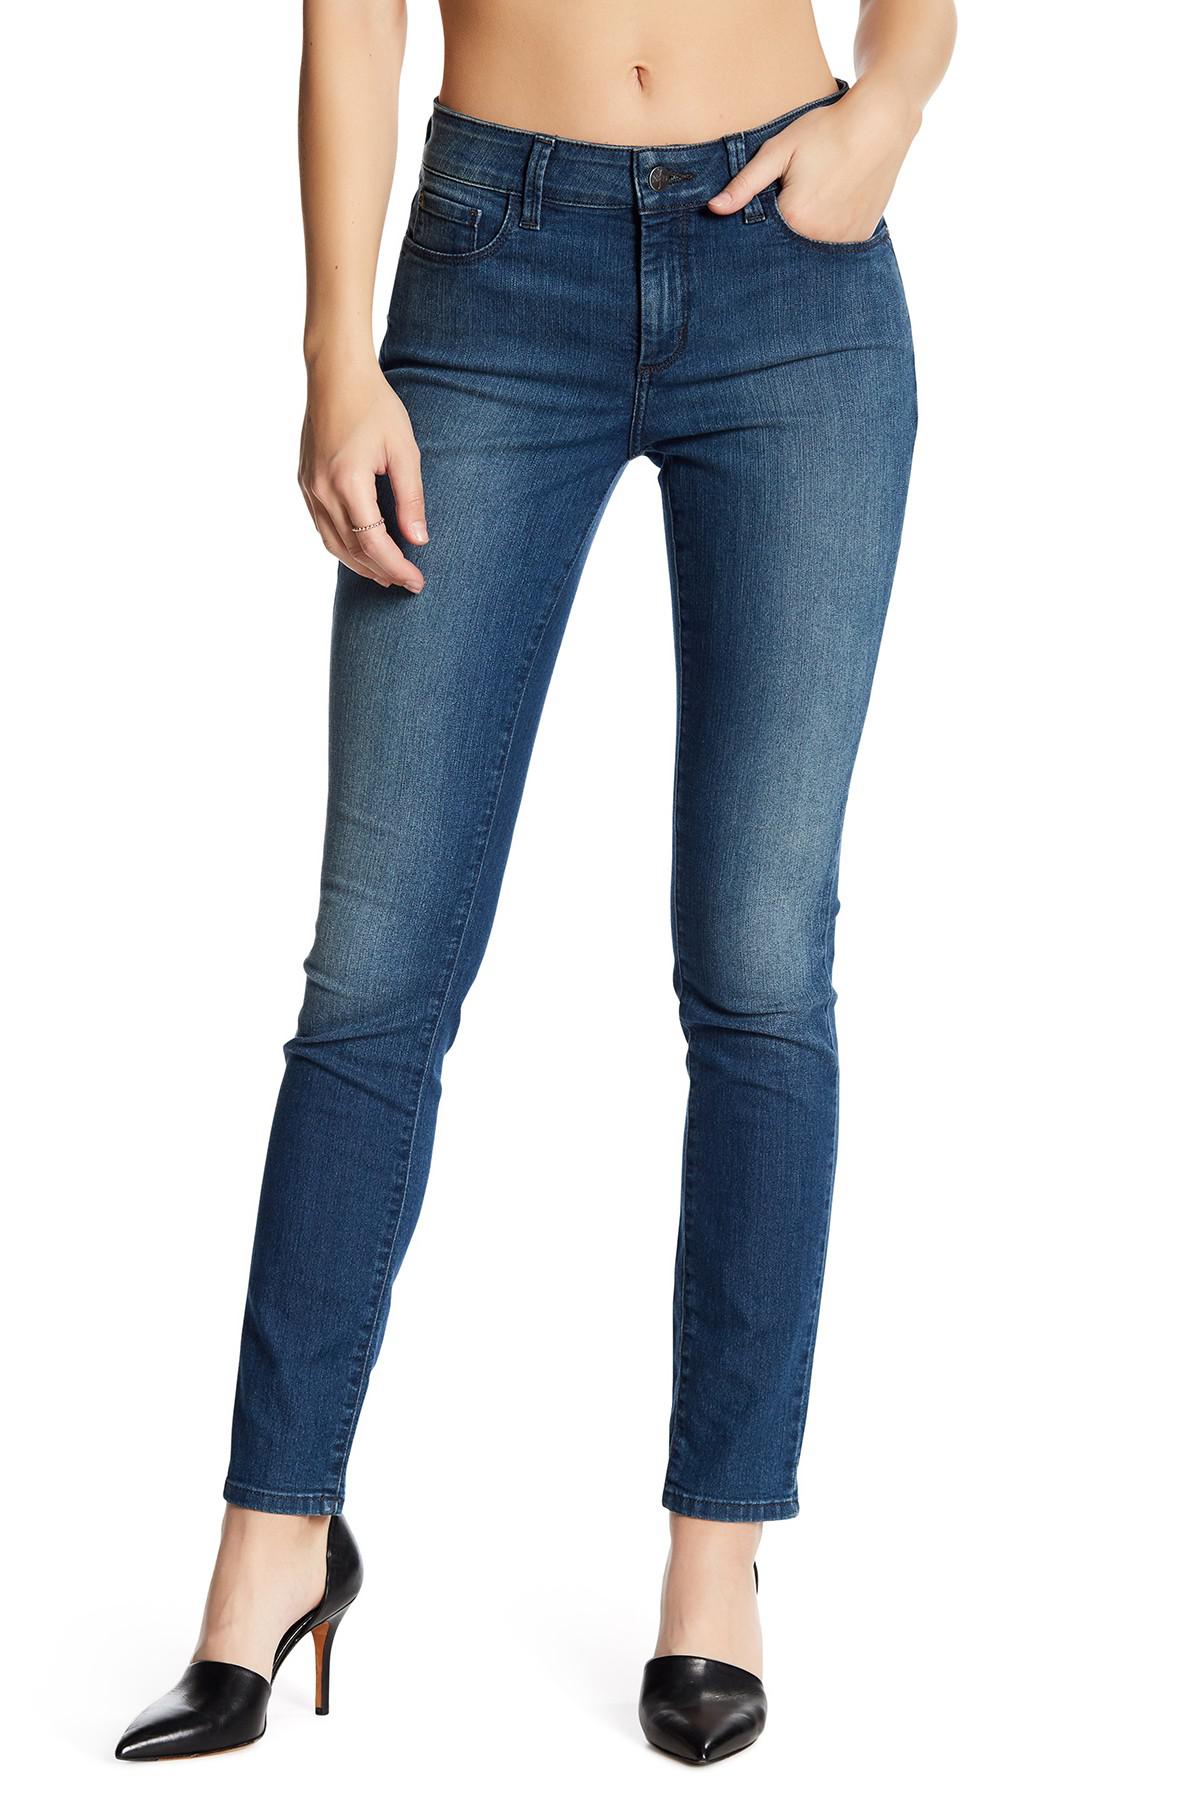 Lyst - Nydj Alina Slim Fit Faded Jeans Leggings in Blue